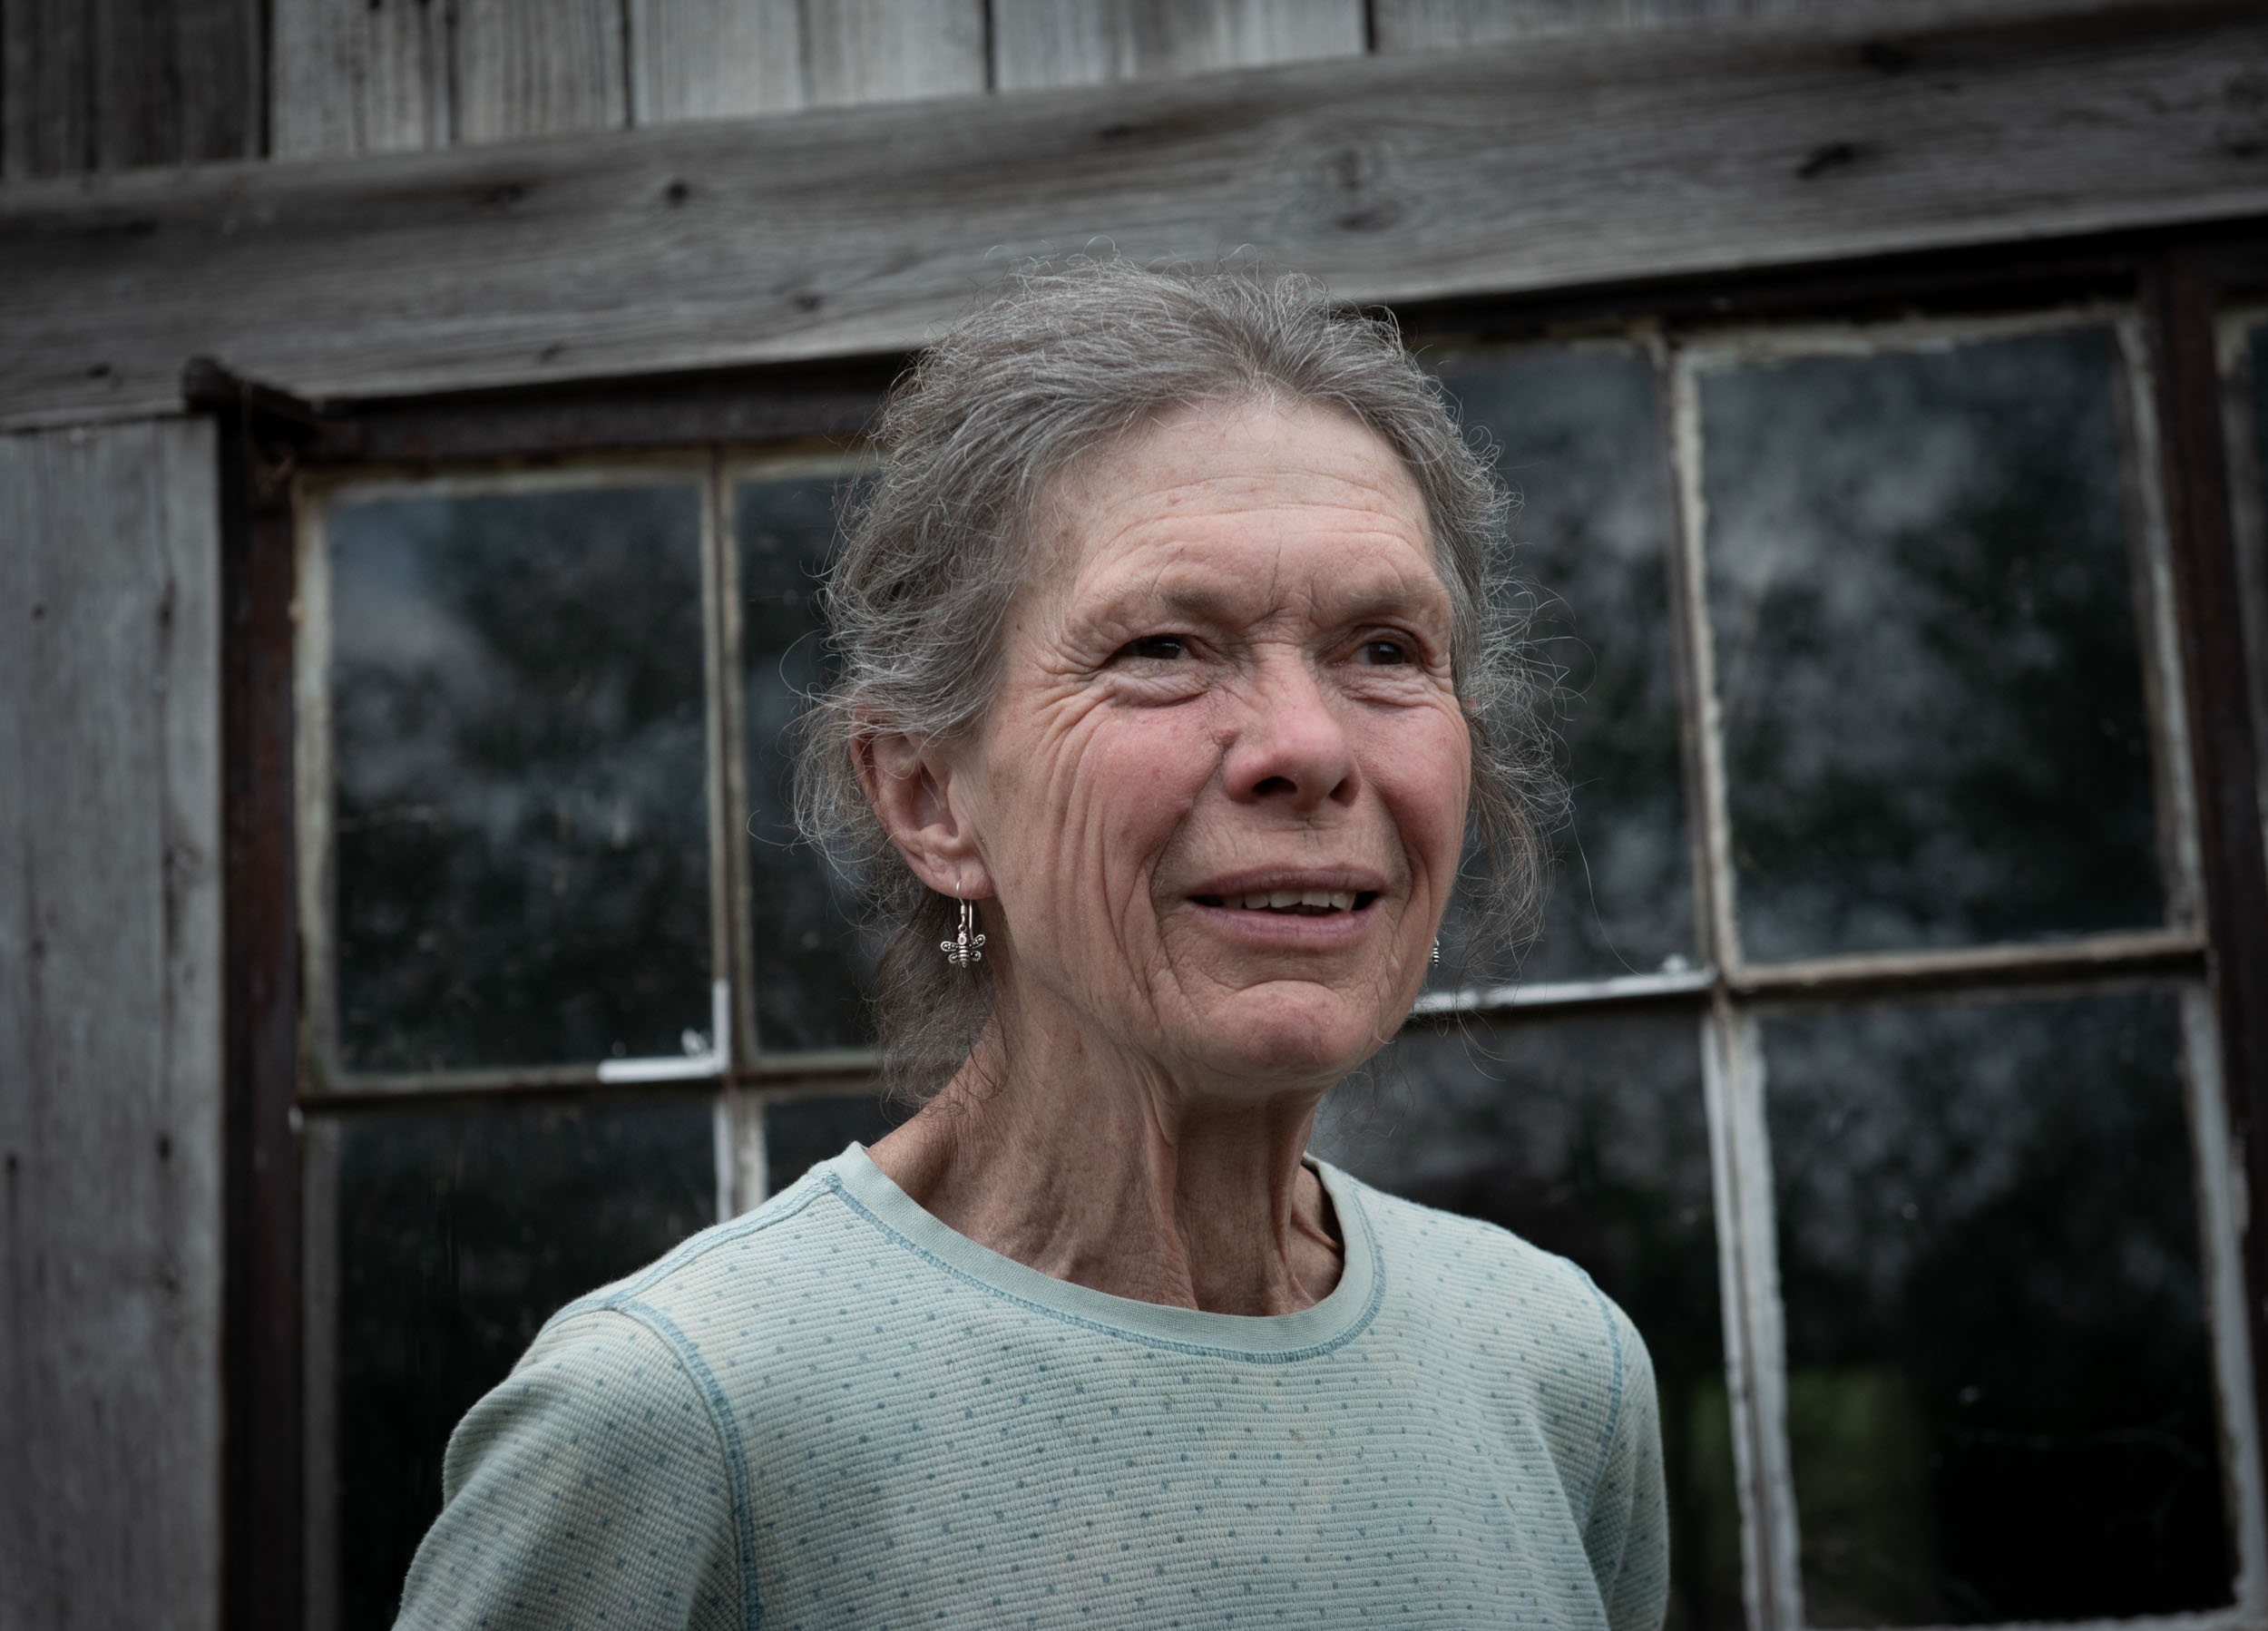 037-Portraits-Senior-Woman-Country-web.JPG